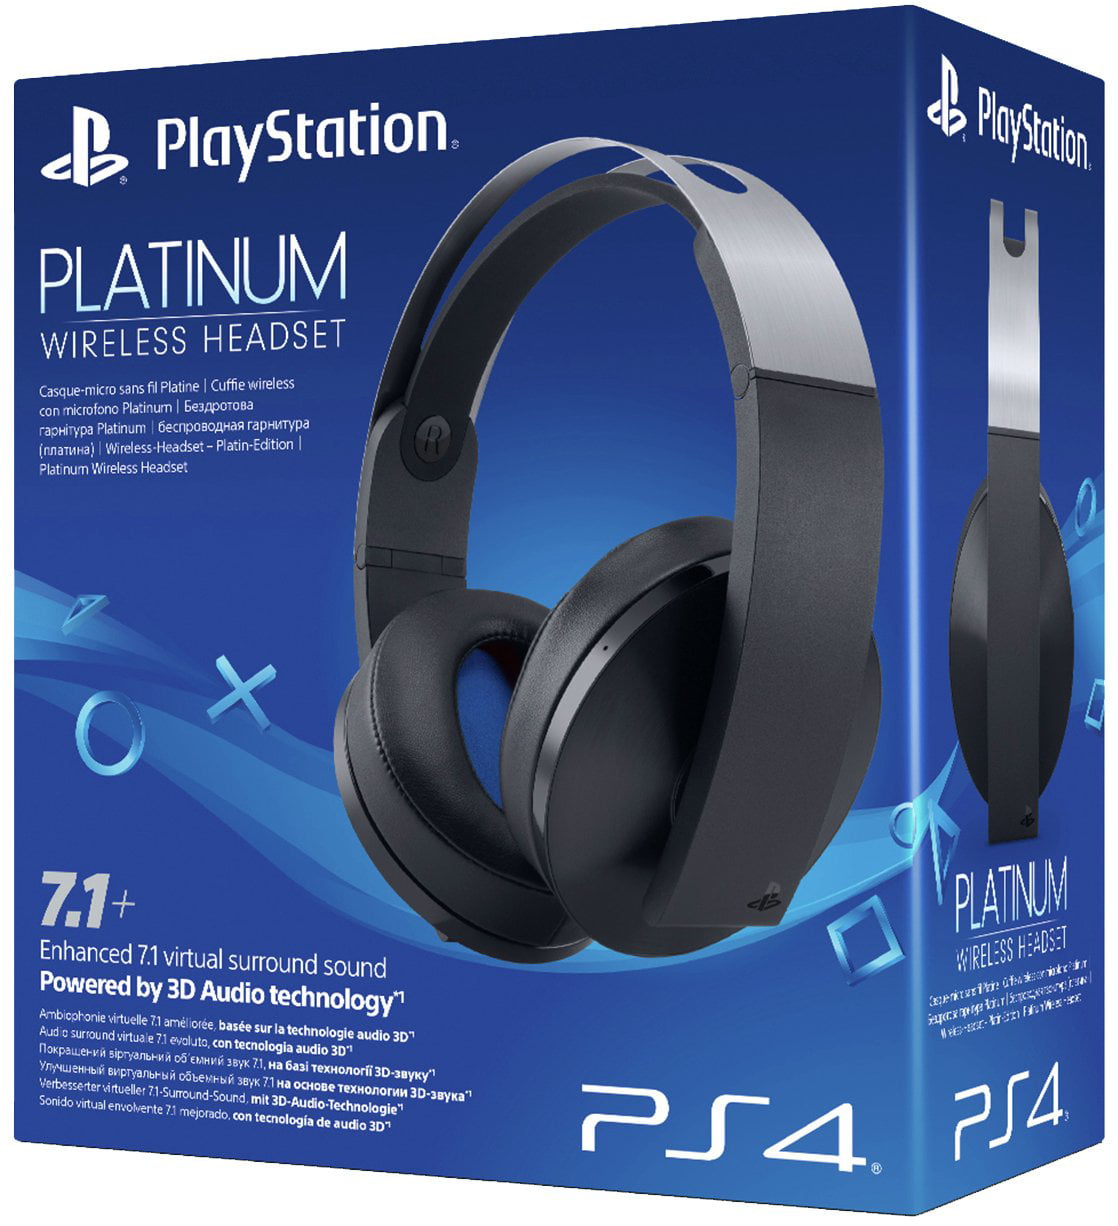 pik wanhoop Minachting Restored Sony Playstation Platinum Wireless Headset 7.1 Surround Sound PS4  (Black) (Refurbished) - Walmart.com